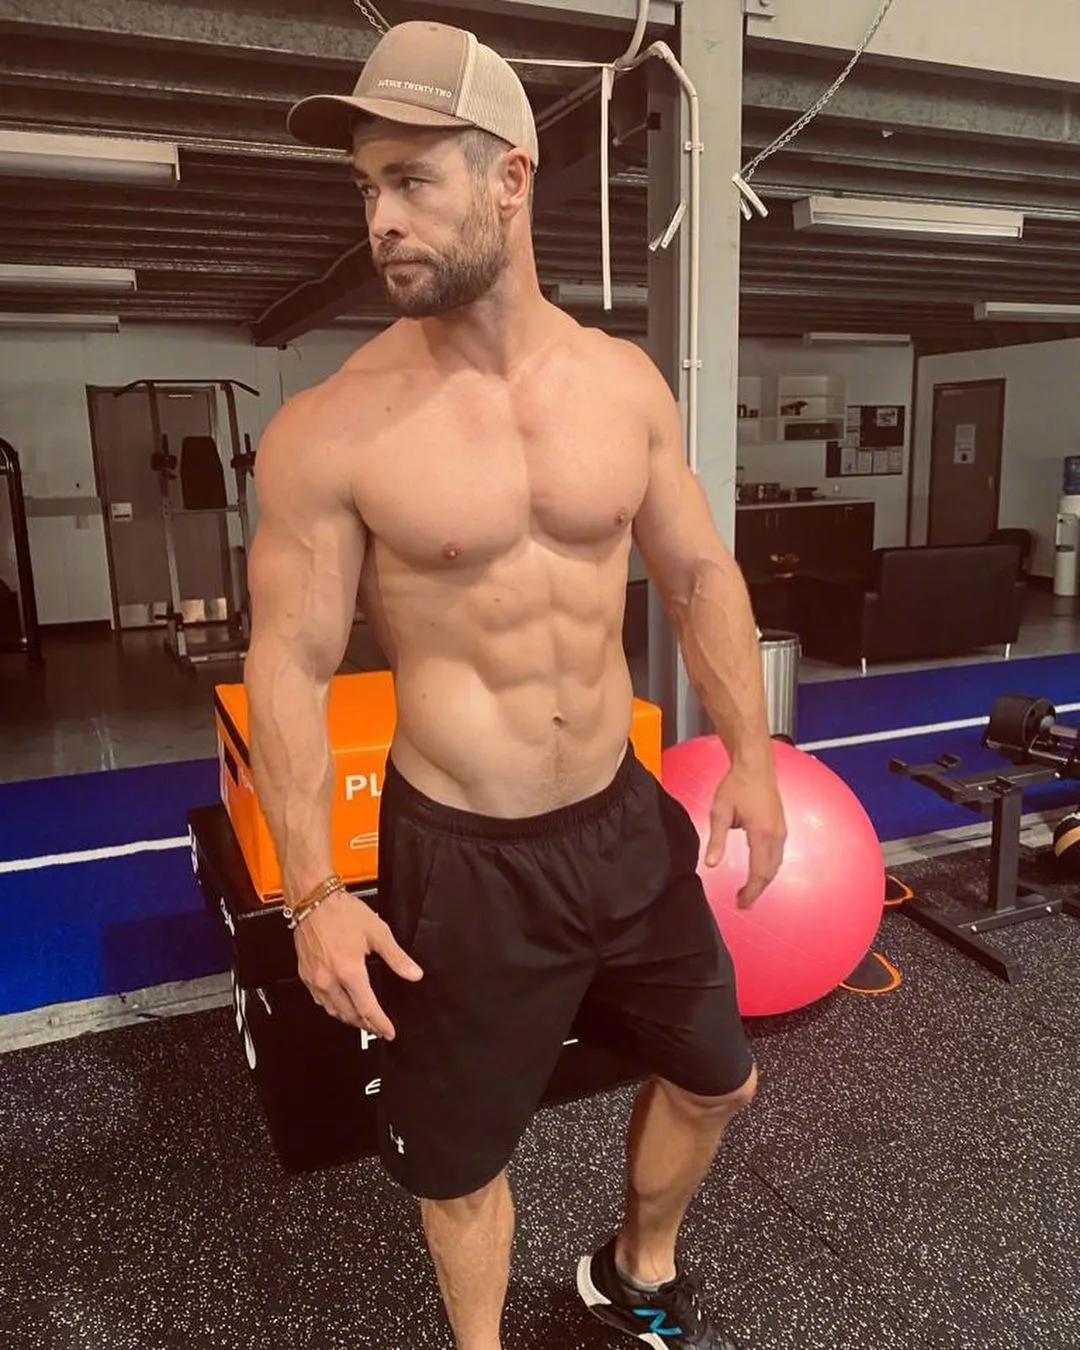 Chris Hemsworth shares fitness photos | FMV6